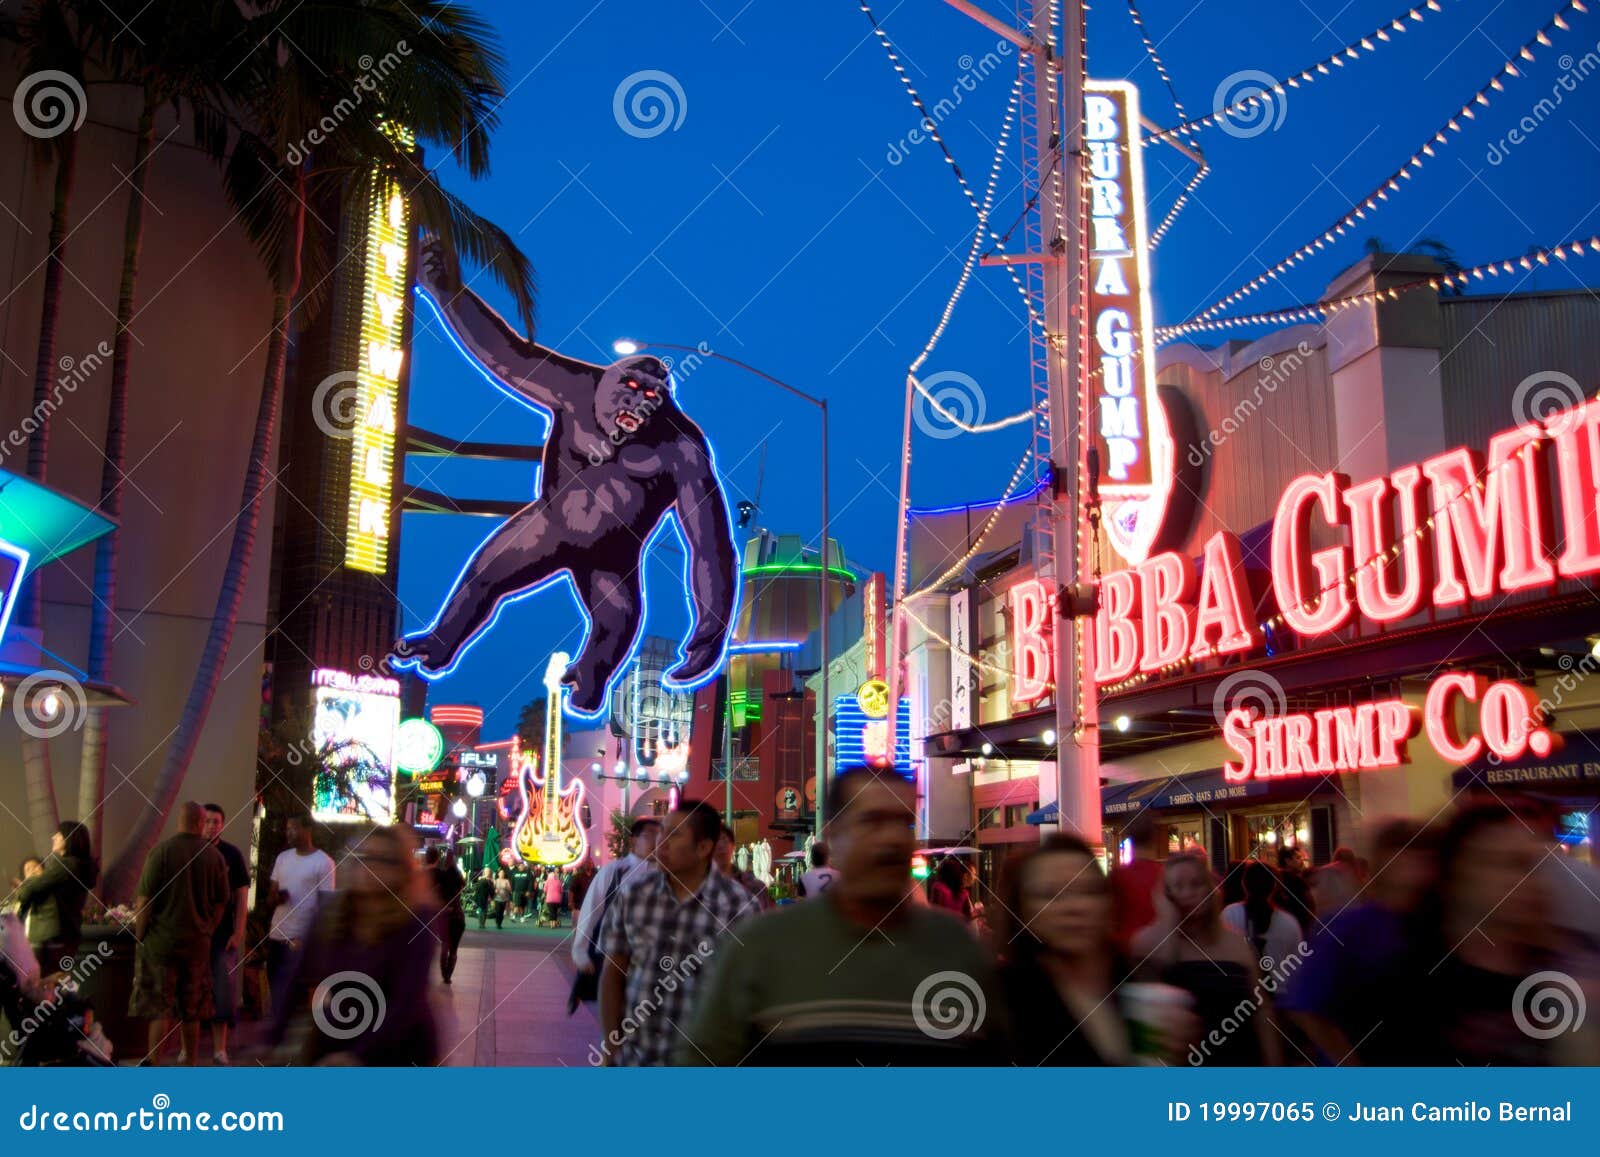 Universal Studios Hollywood Citywalk Editorial Image - Image of studios